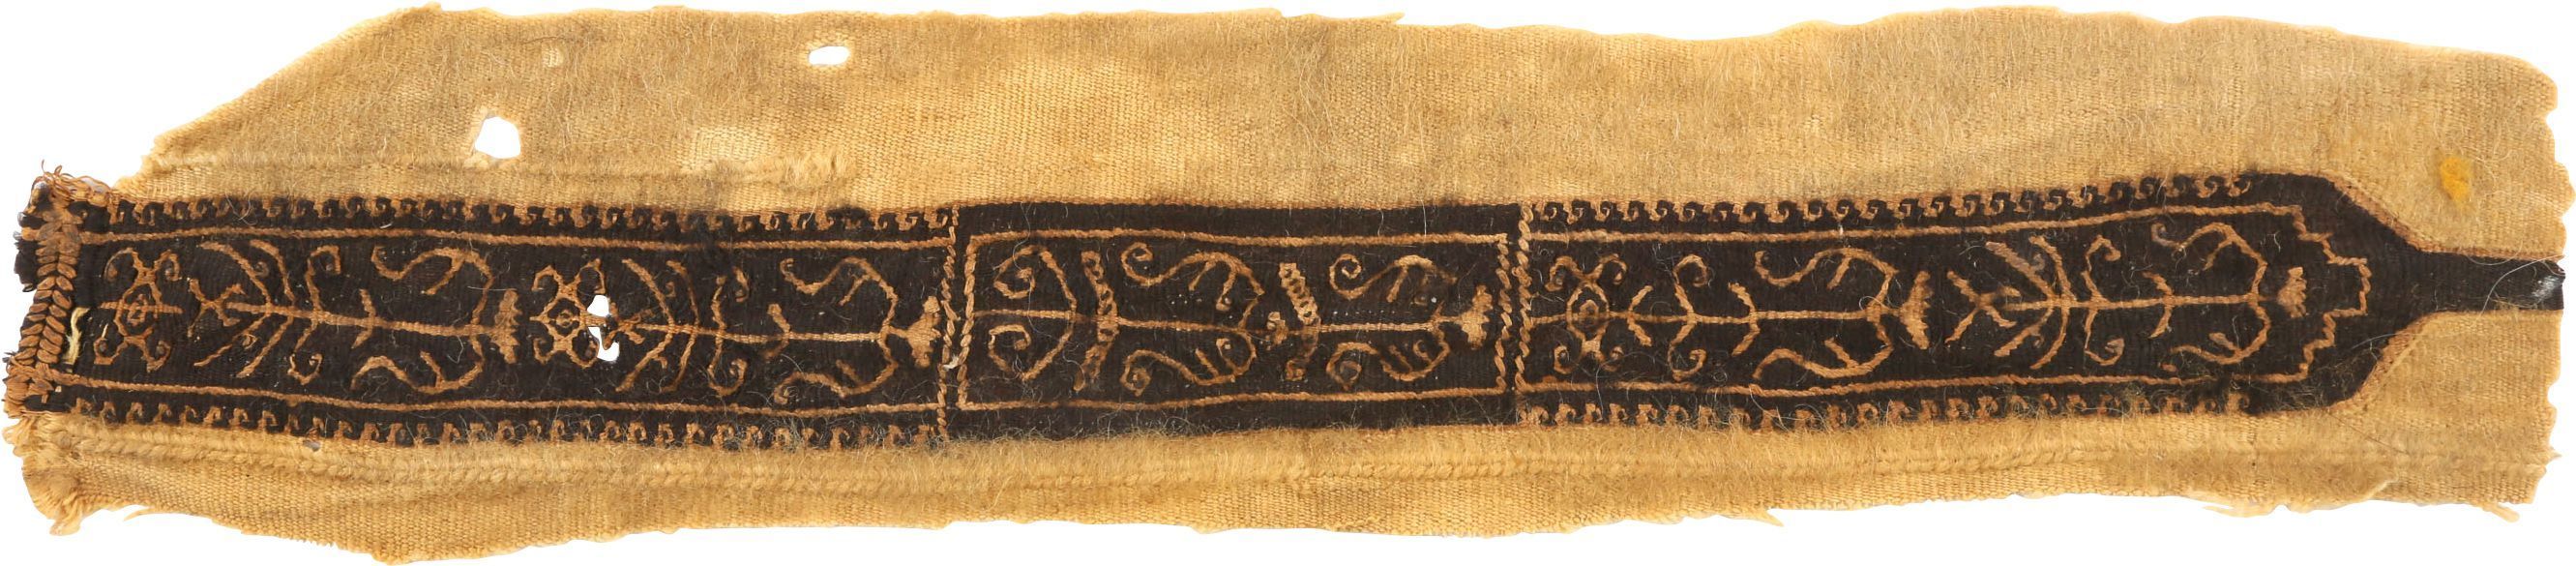 EGYPTIAN CLOTH PANEL, 4th CENTURY AD - Fagan Arms